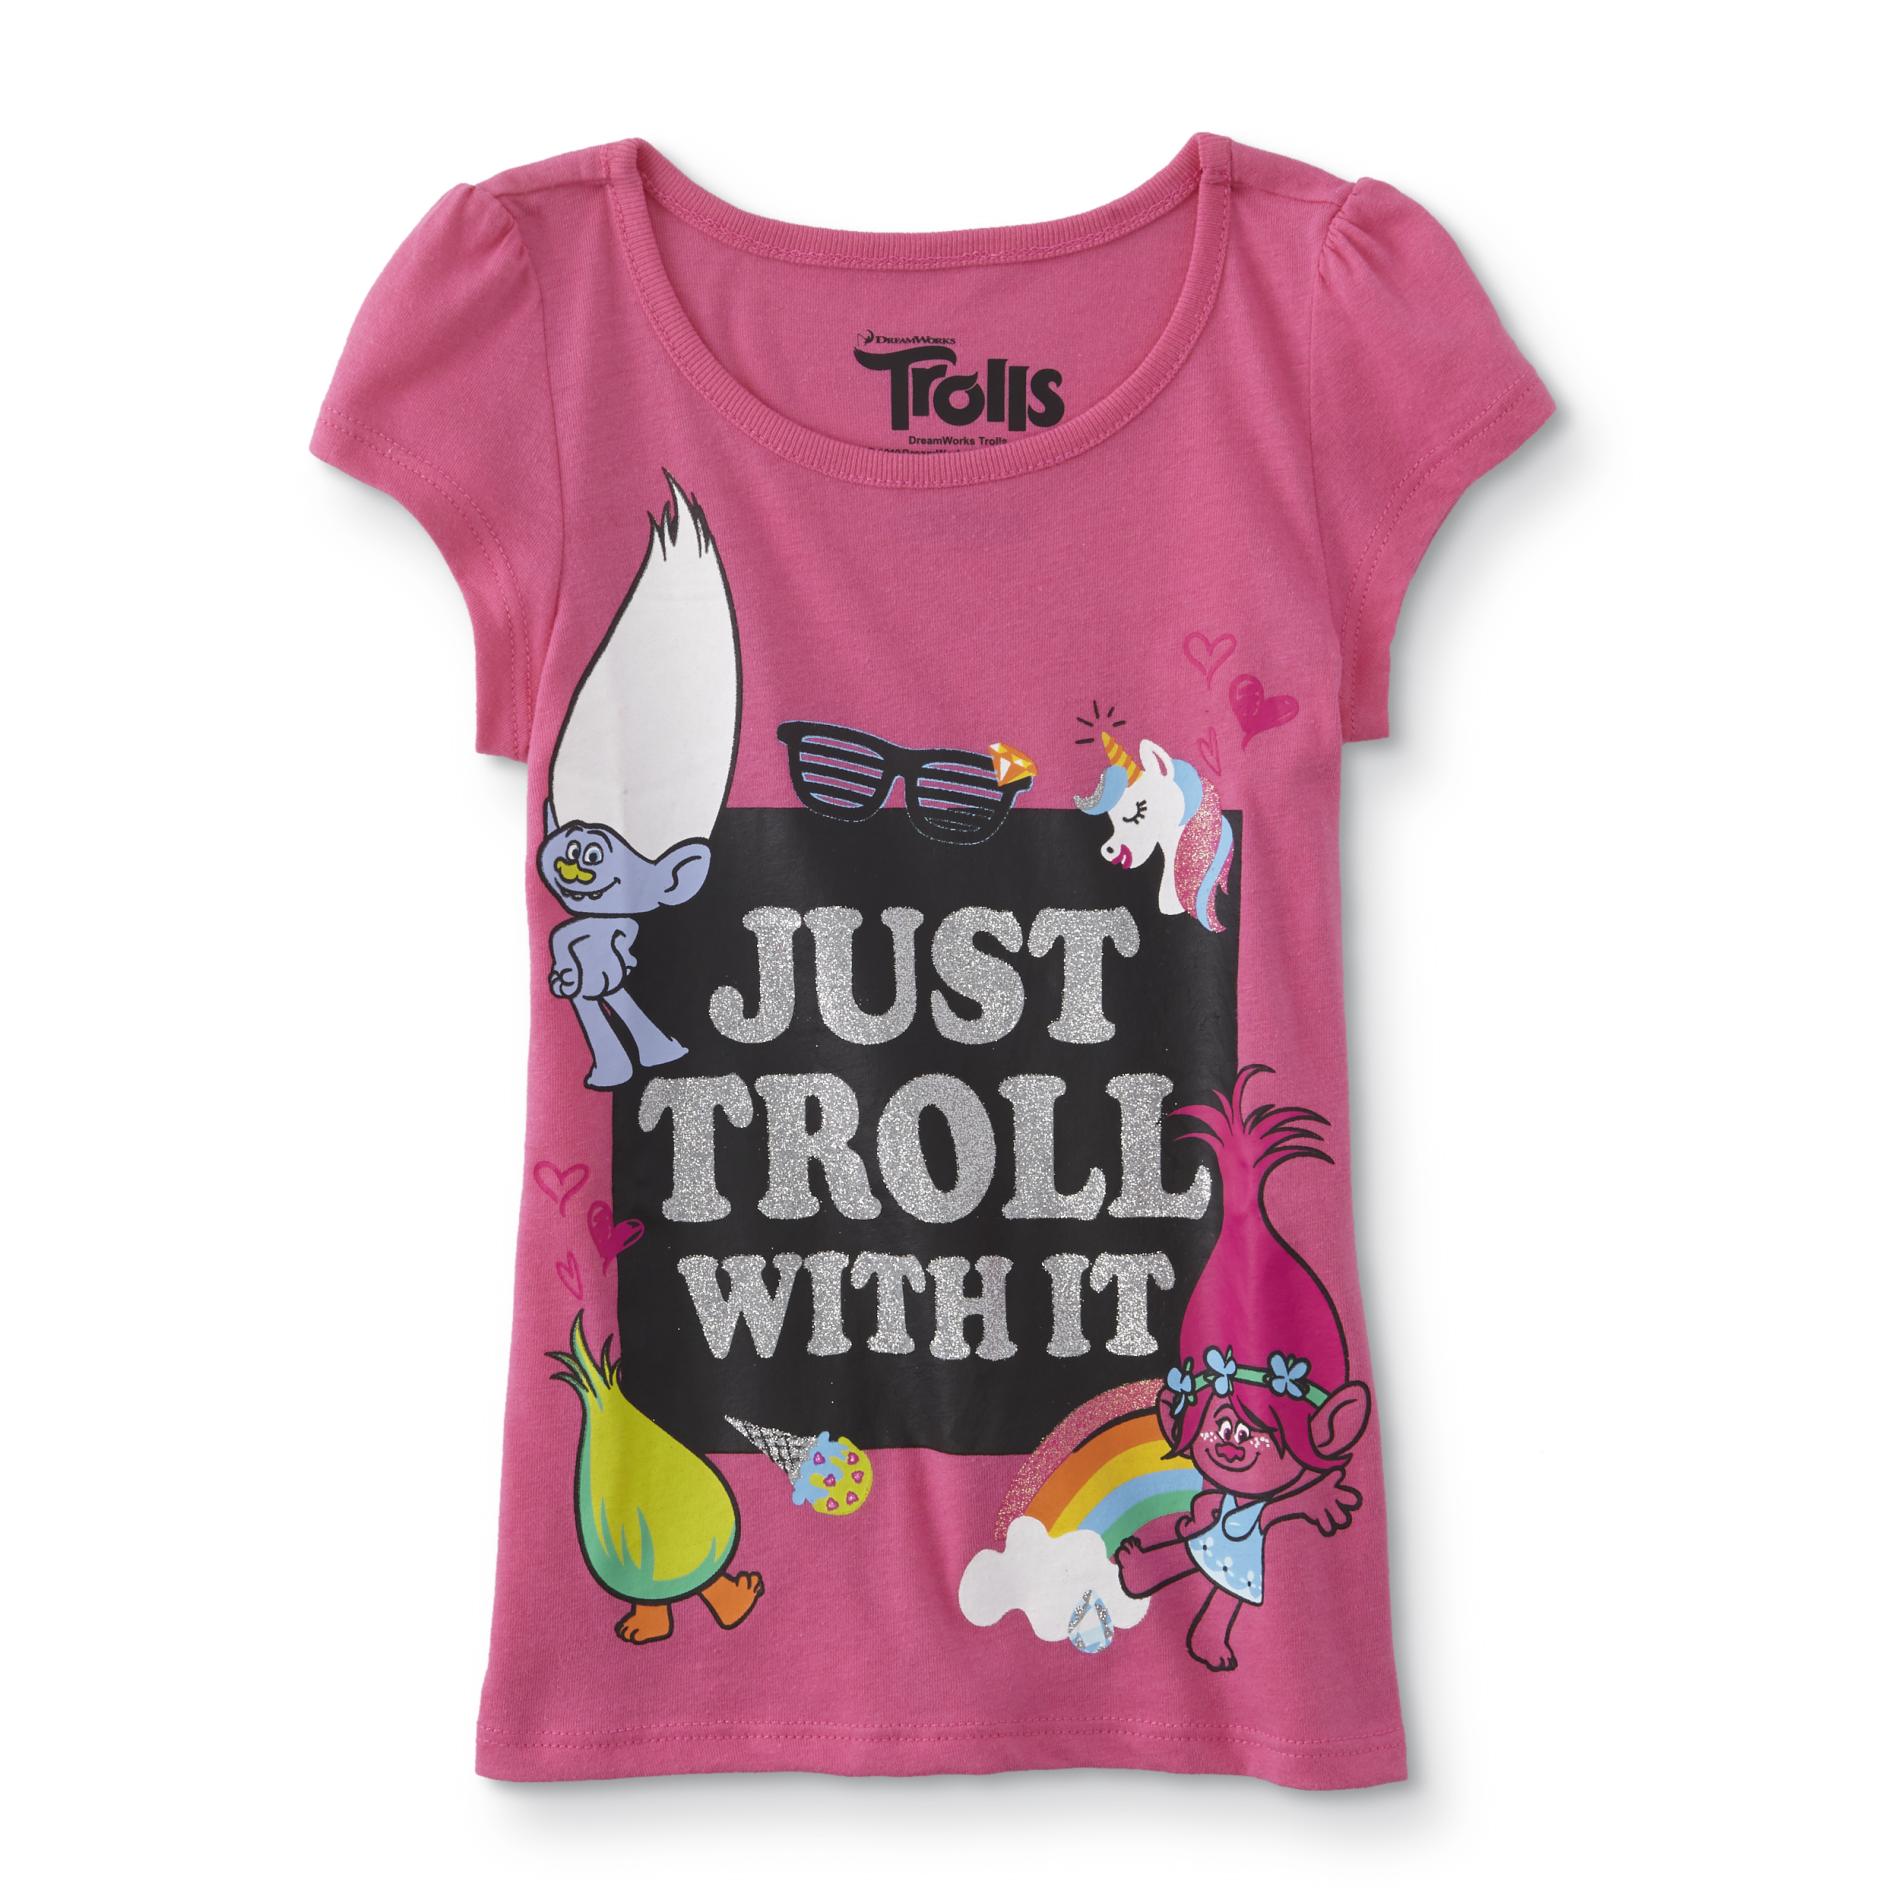 Children's Apparel Trolls Girls' Graphic T-Shirt - Just Troll With It